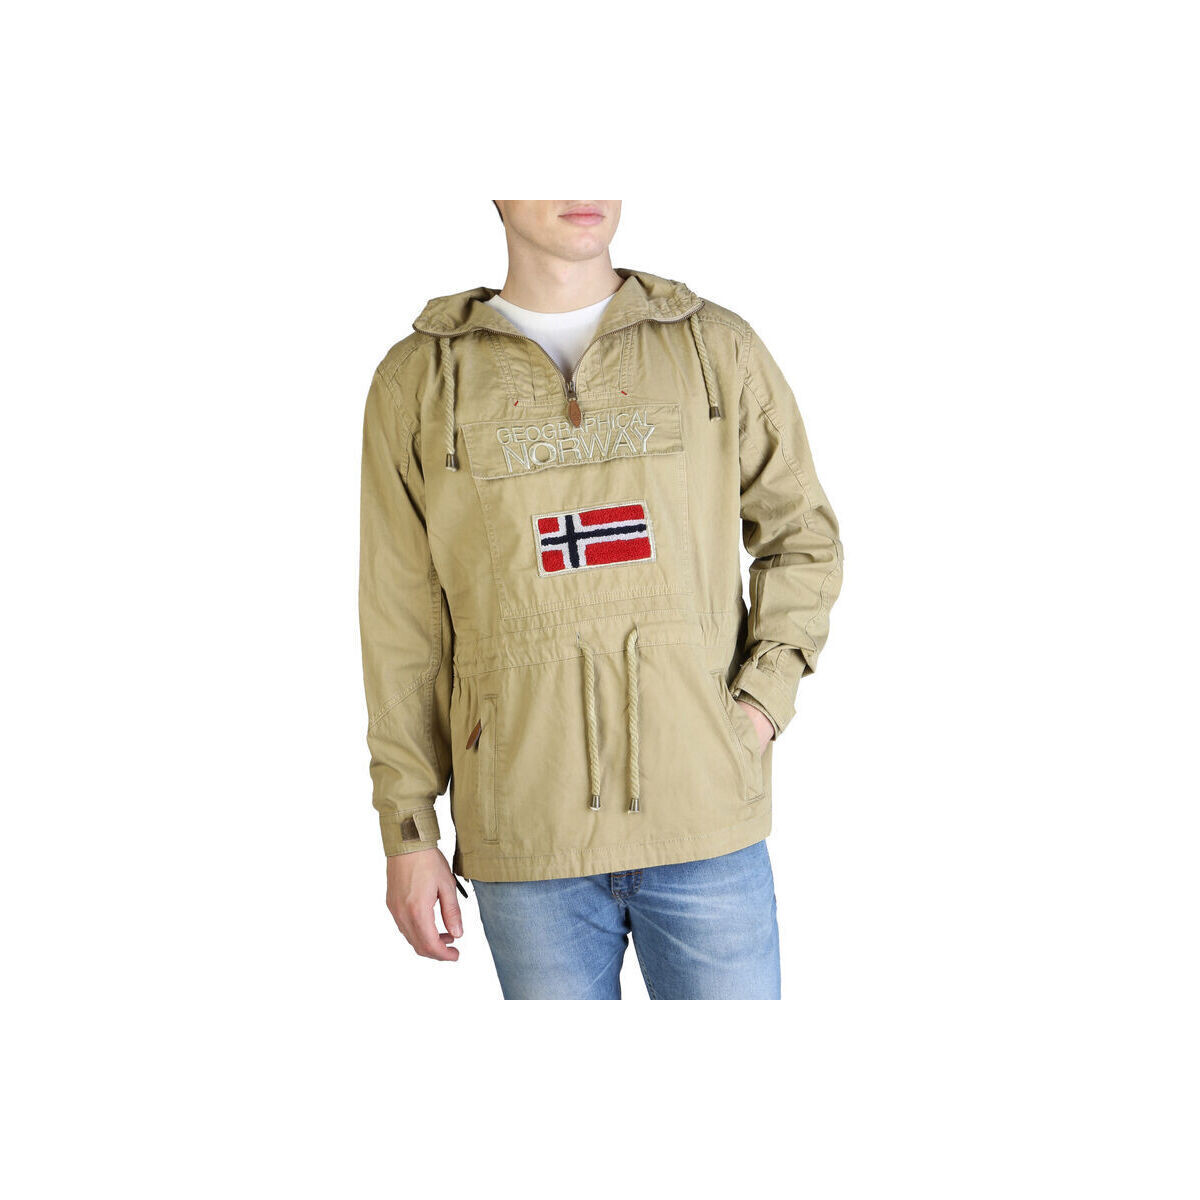 textil Herre Sportsjakker Geographical Norway - Chomer_man Brun